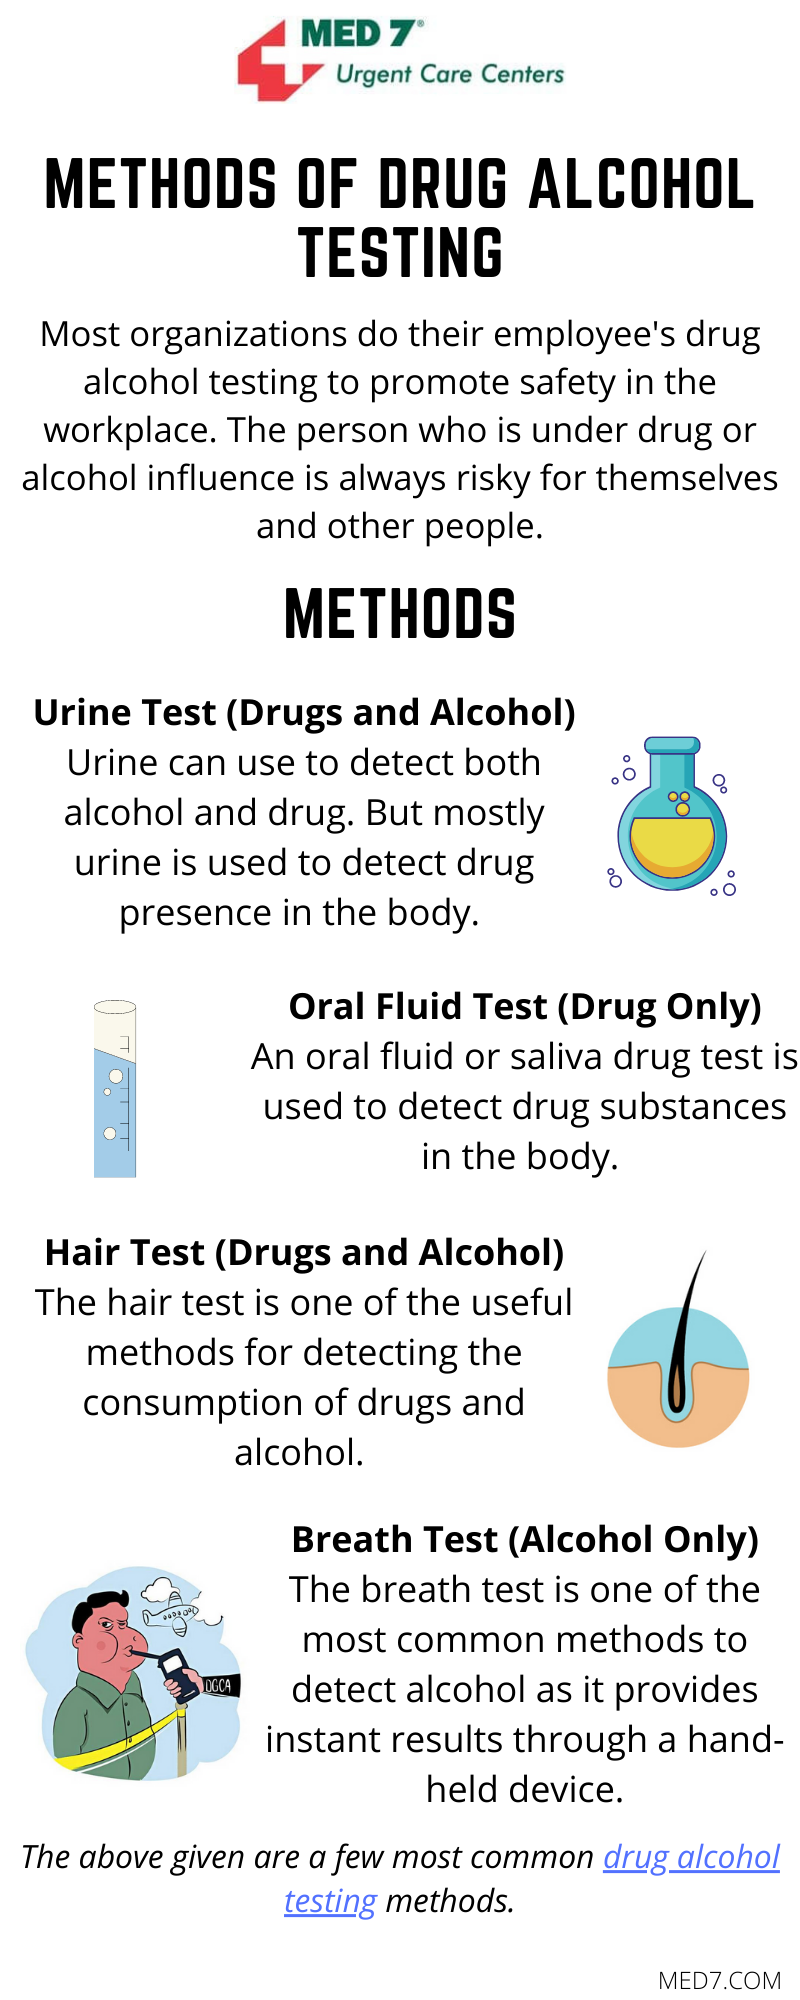 Methods of Drug Alcohol Testing